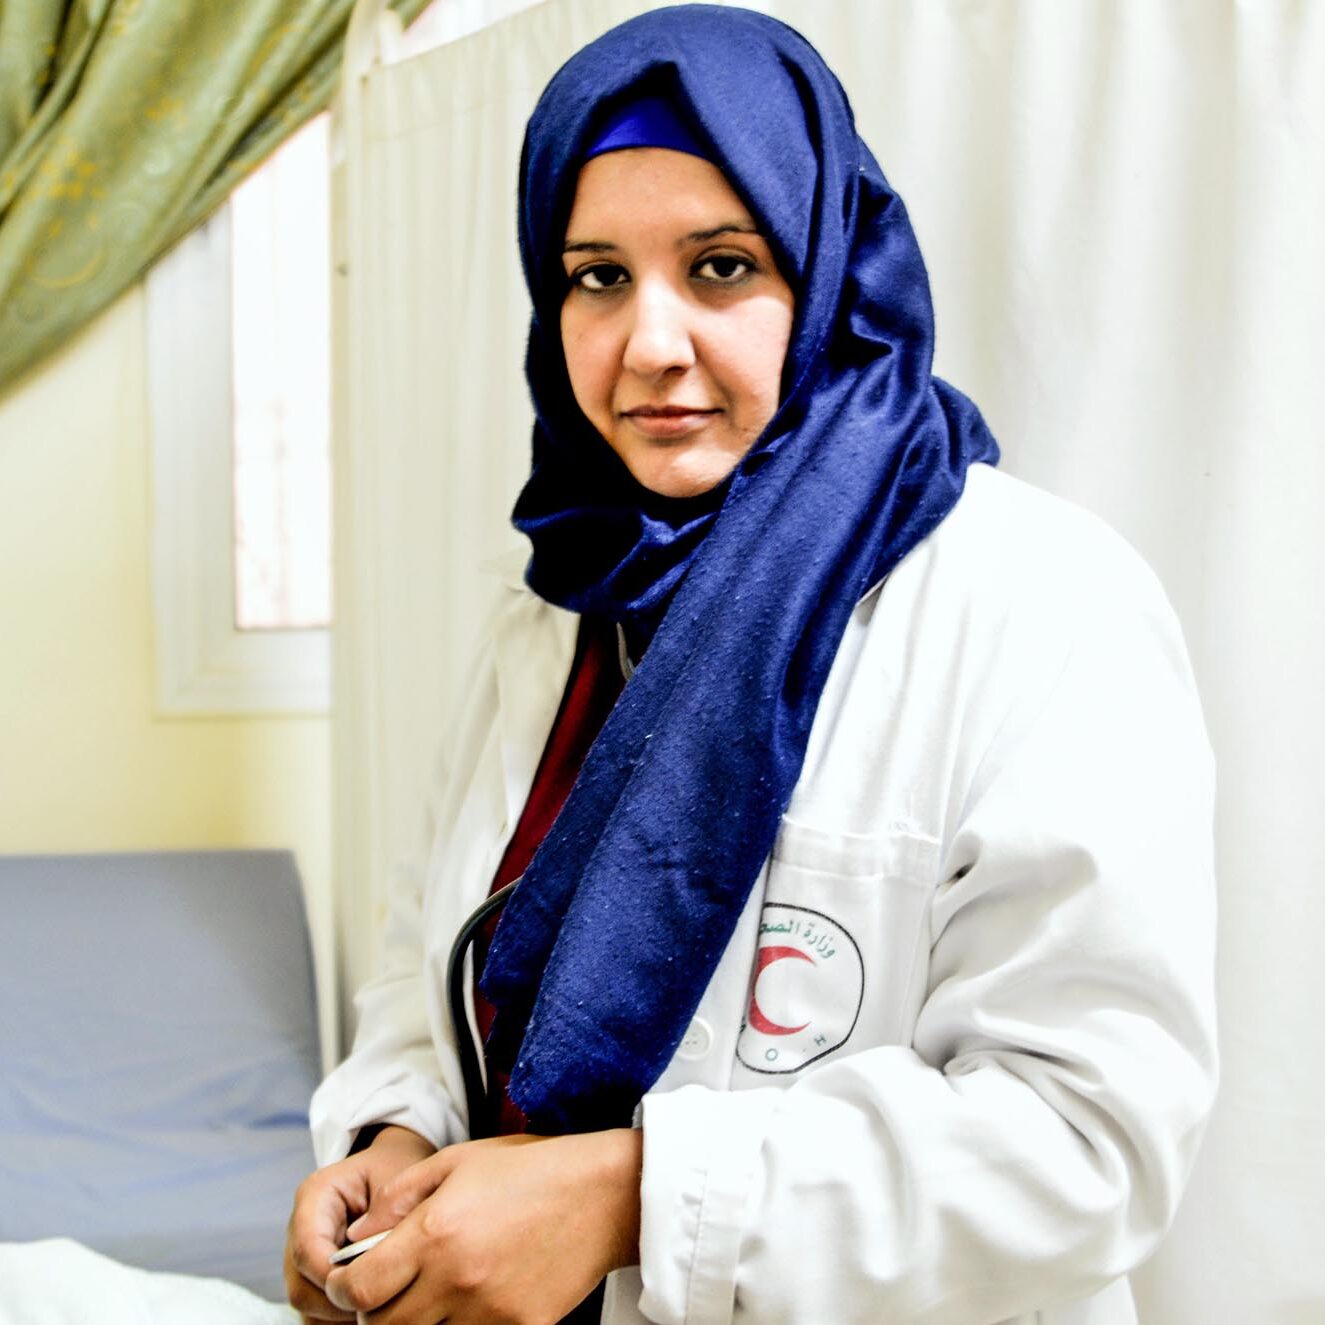 Dr. Manal Abu Jiban, a Palestinian doctor at the health clinic in Wadi Salqa, Gaza.